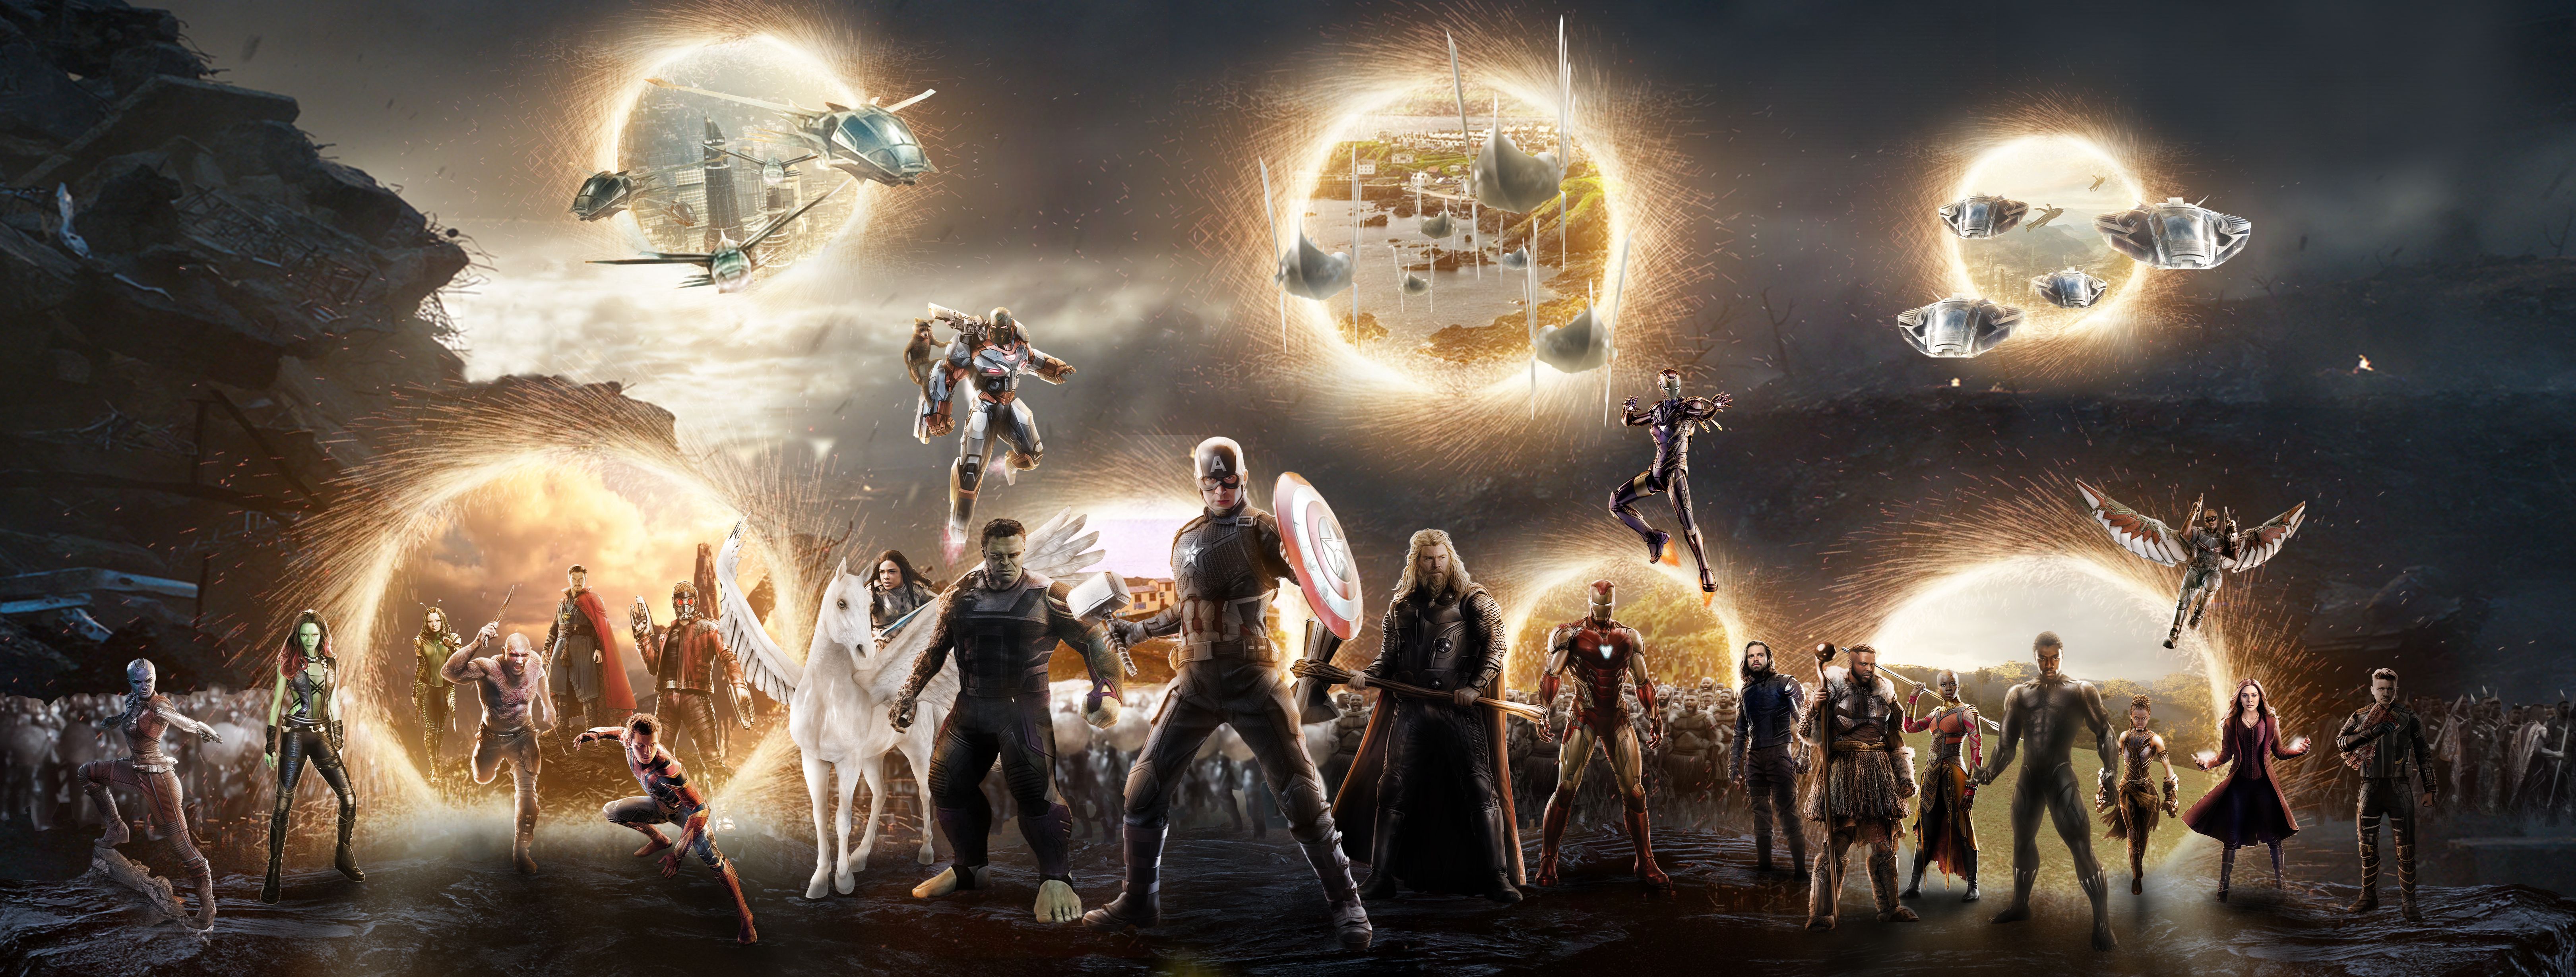 5k Avengers Endgame Final Battle Scene, HD Superheroes, 4k Wallpaper, Image, Background, Photo and Picture